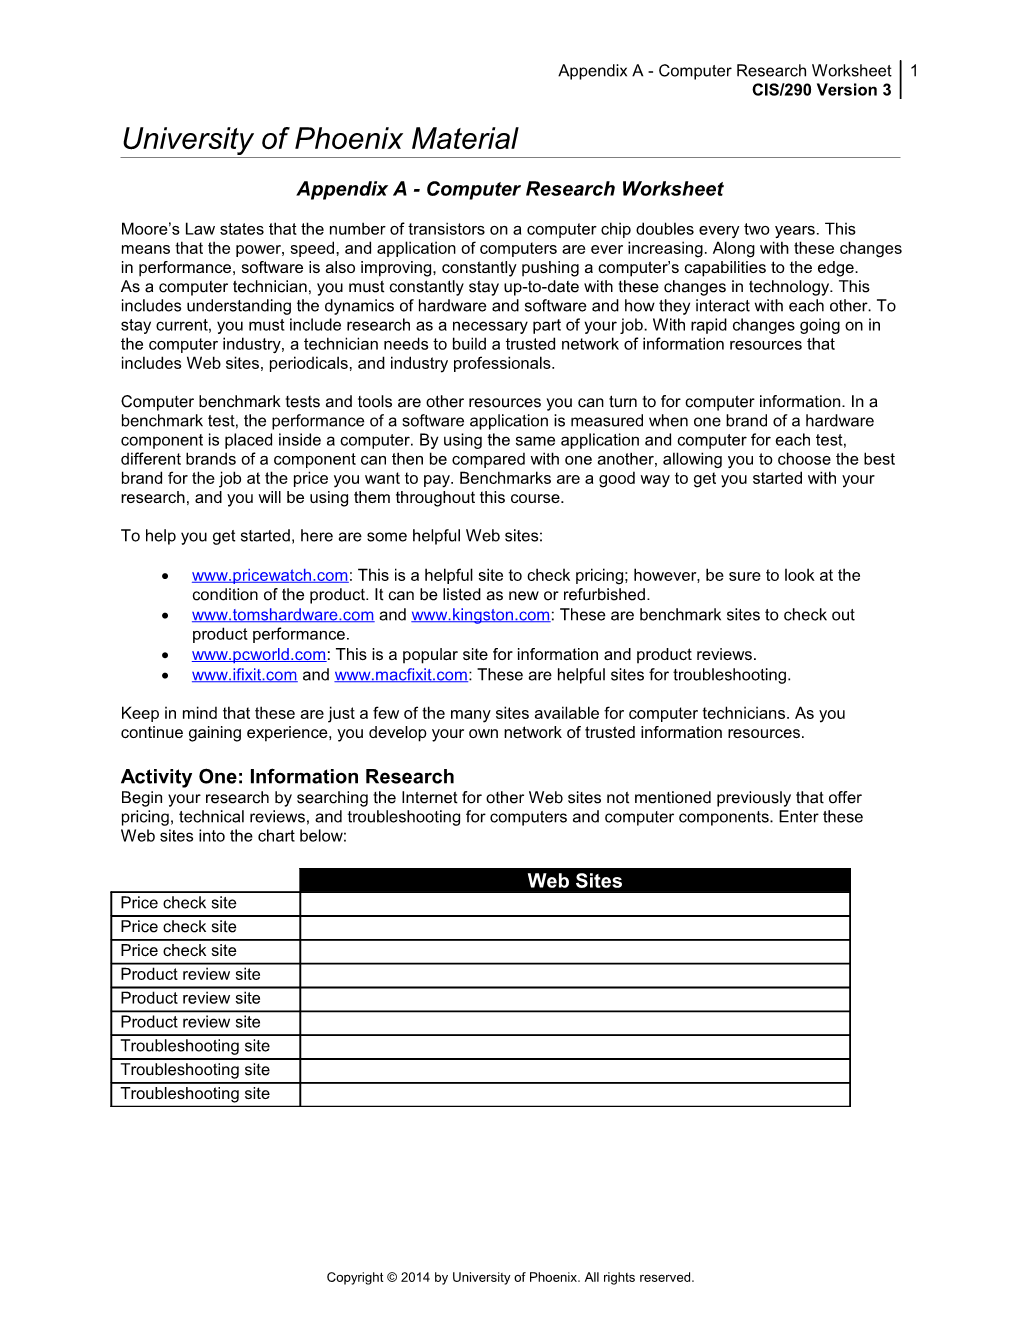 Appendix a - Computer Research Worksheet